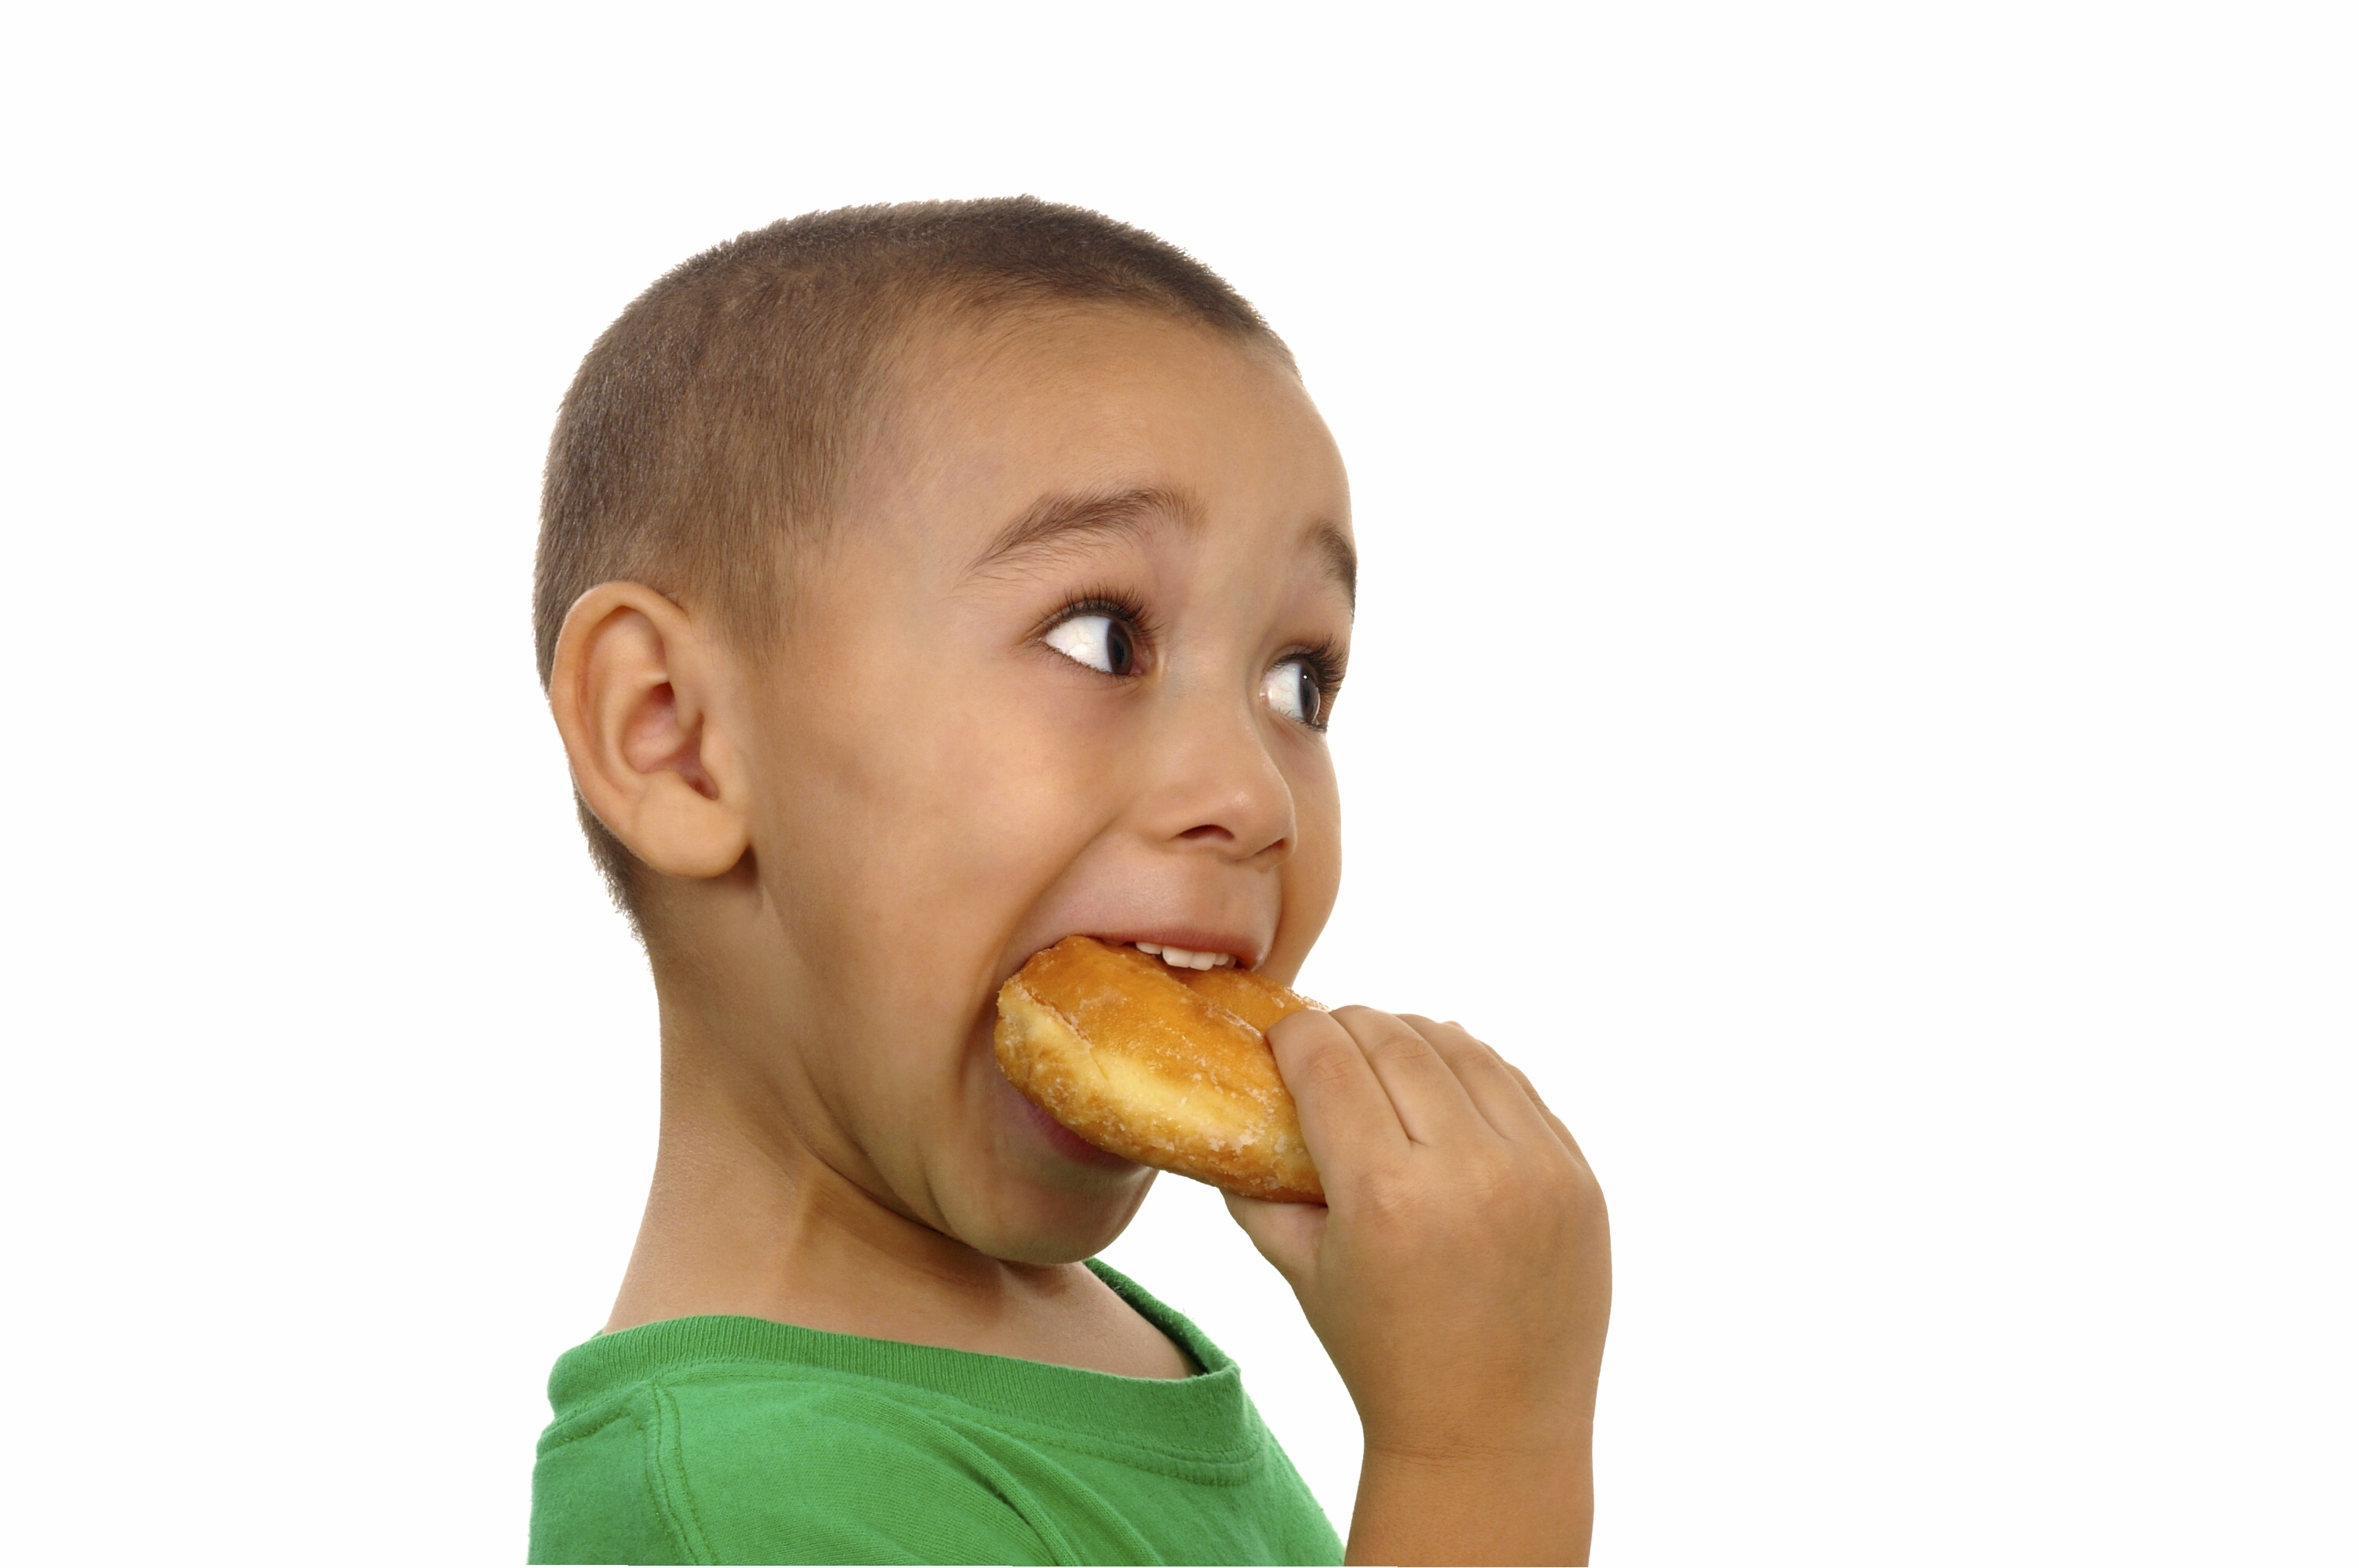 doughnut-boy-istock.jpg